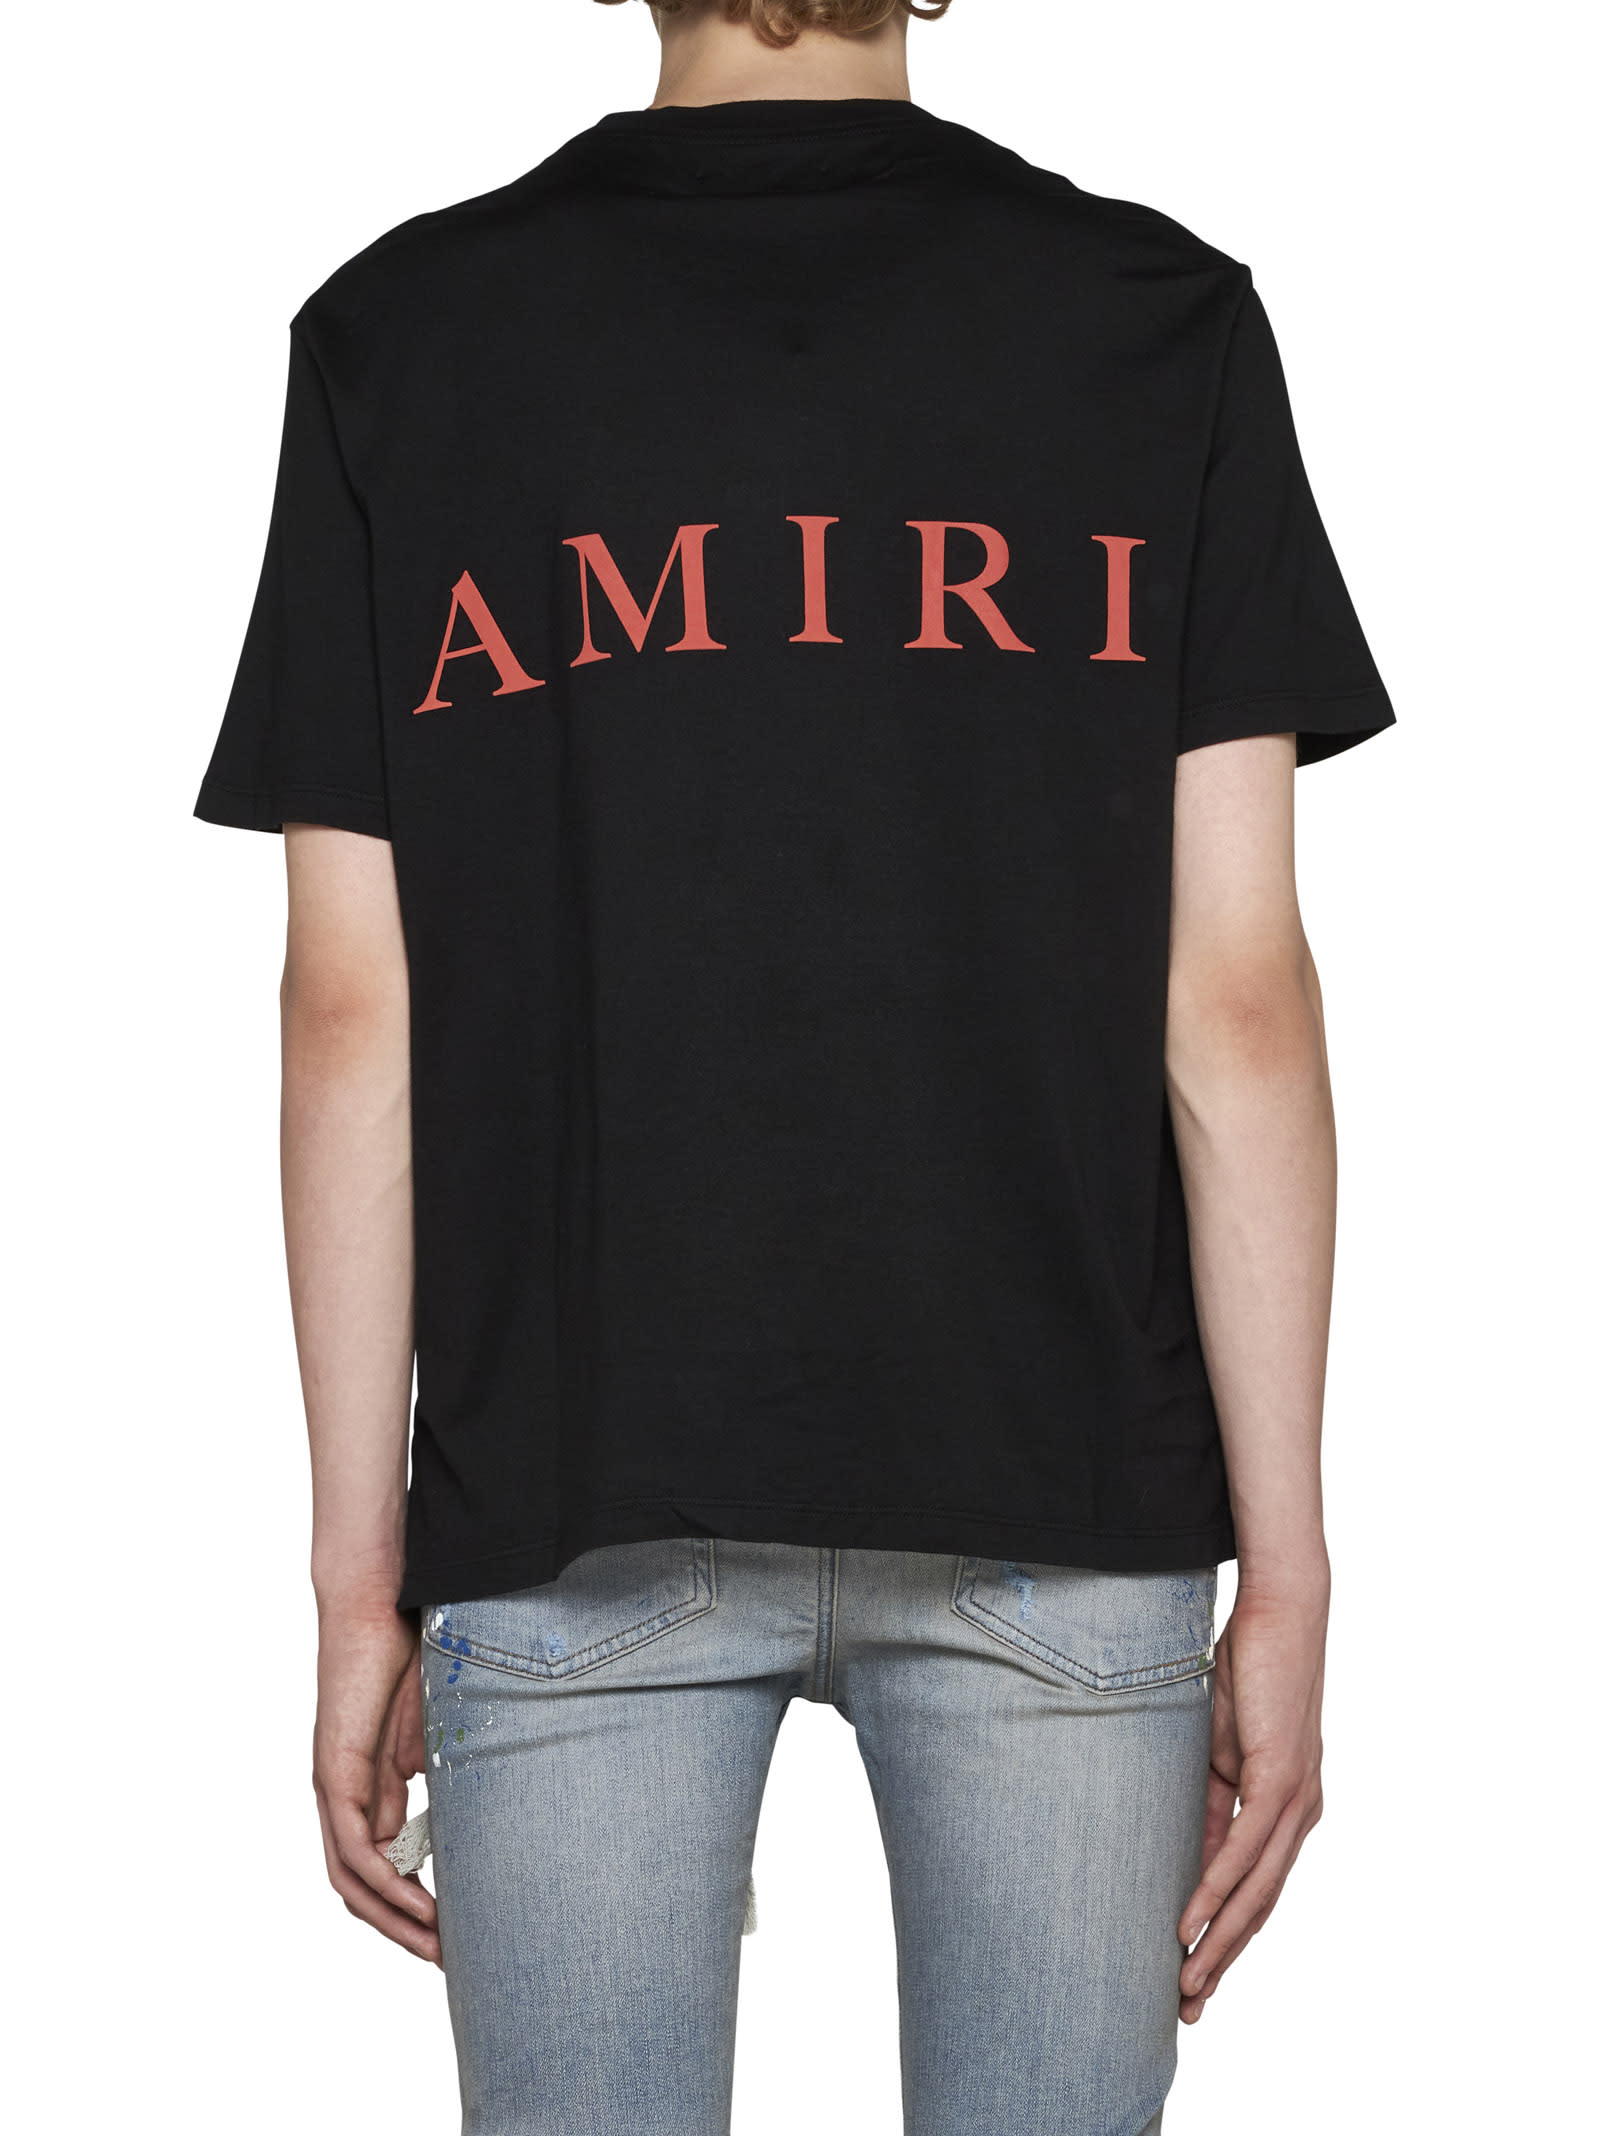 Amiri Core Logo Print T-shirt in Red for Men